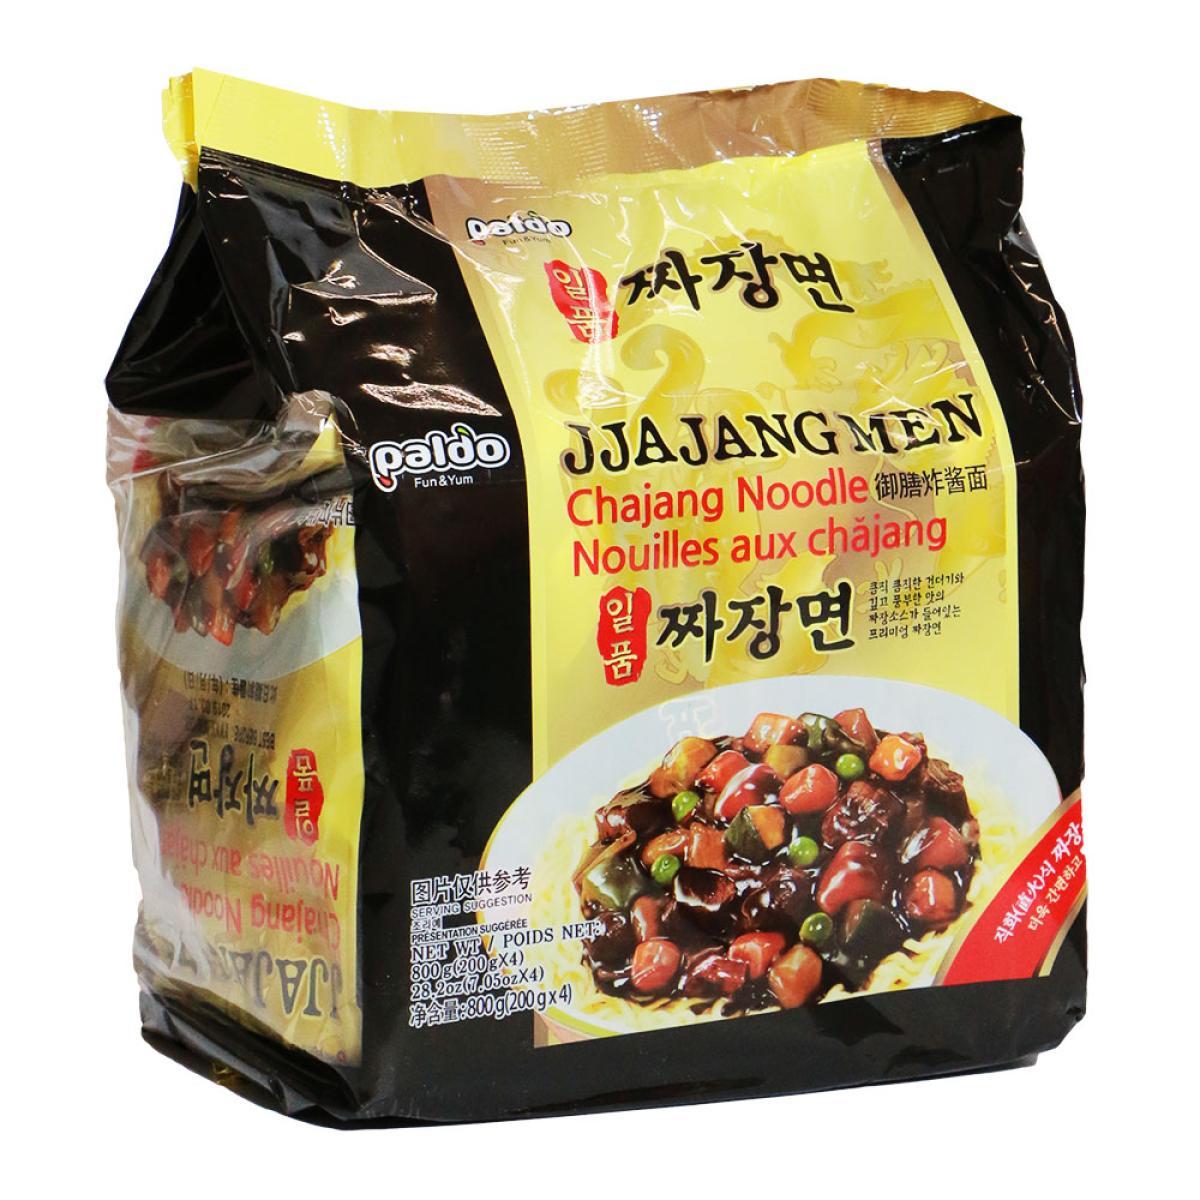 Paldo Jjajangmen Chajang Fideos con Salsa Negra (paquete de 4) - 800g/28.2oz